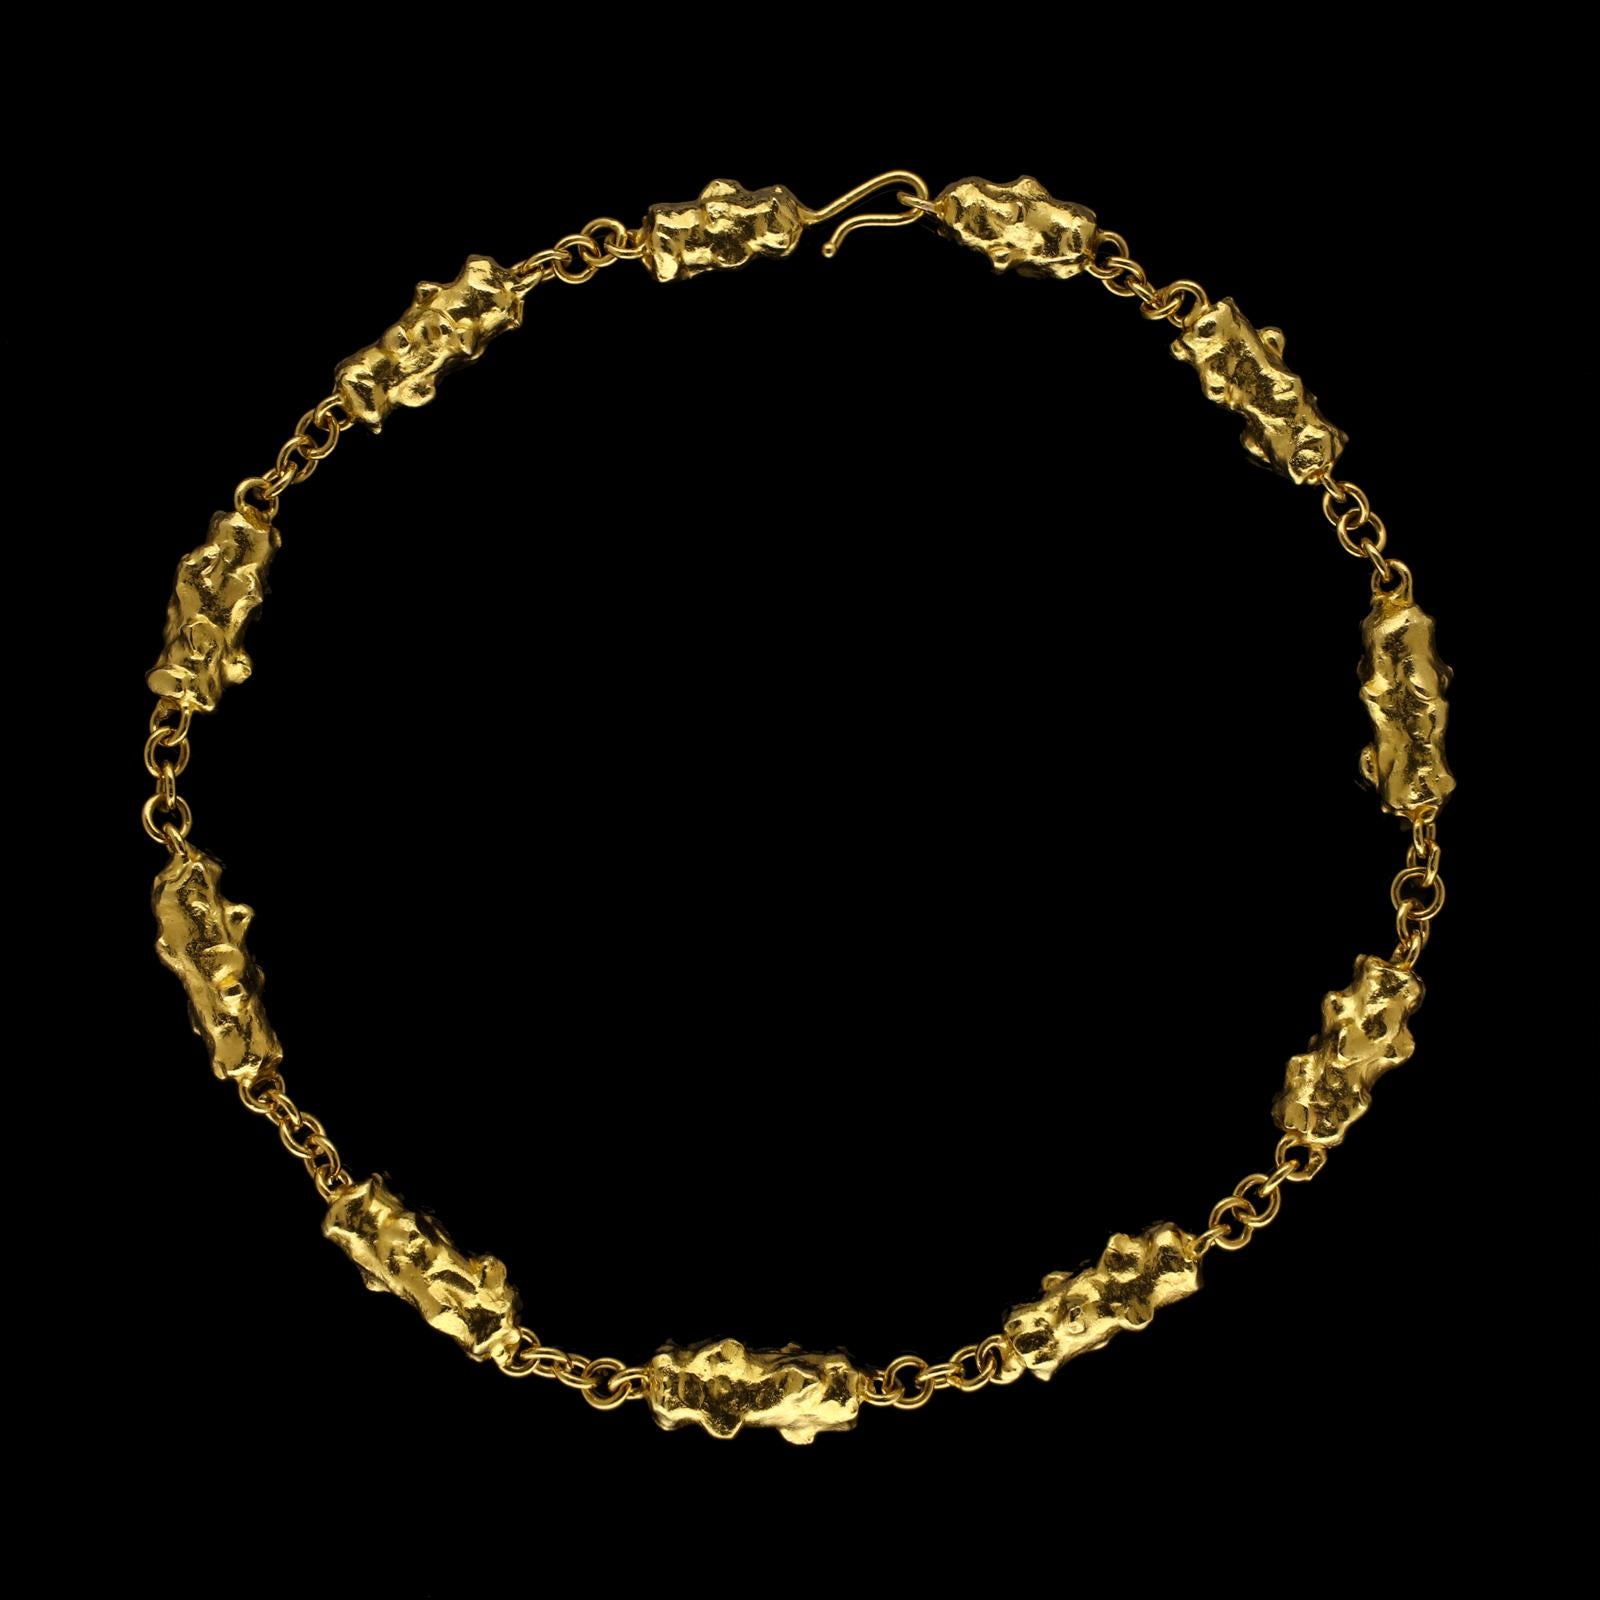 Contemporary Jean Mahie 22 Carat Gold Nuggets Necklace circa 1970s